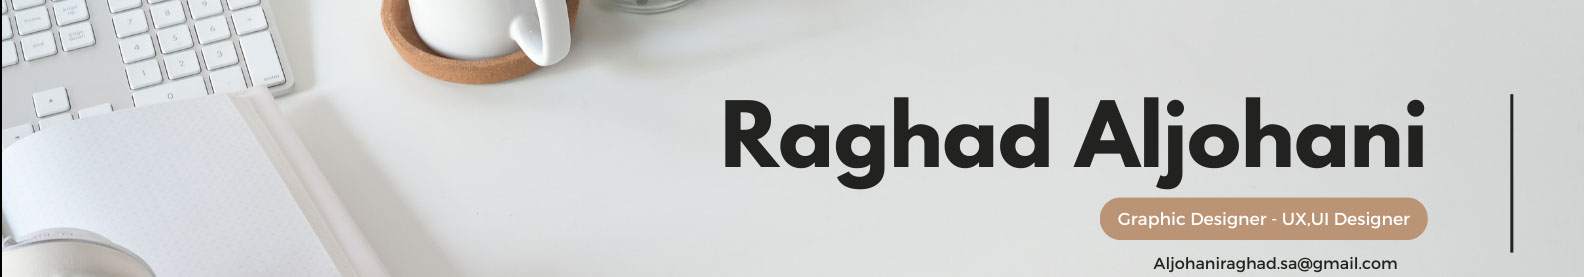 Banner de perfil de RAGHAD ALJOHANI